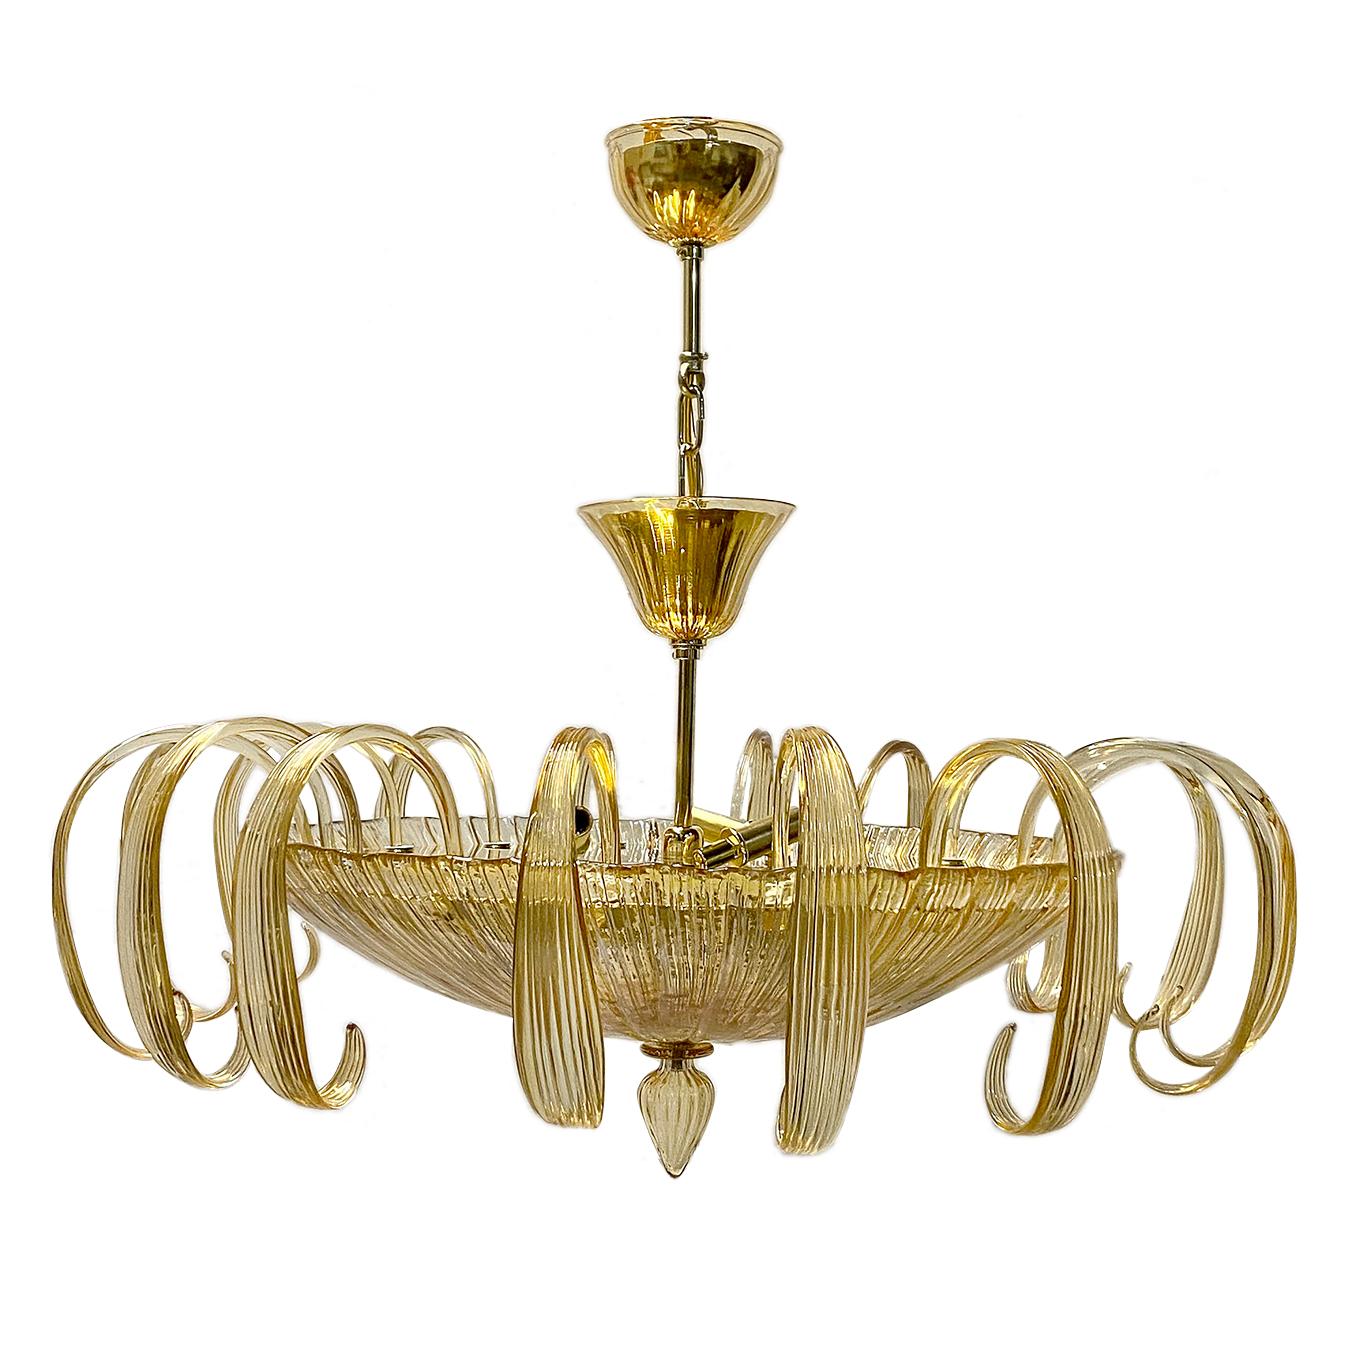 A circa 1950's hand blown champagne tone Murano glass chandelier with interior lights.

Measurements:
Diameter 33?
Current drop 30?
Minimum drop 18?